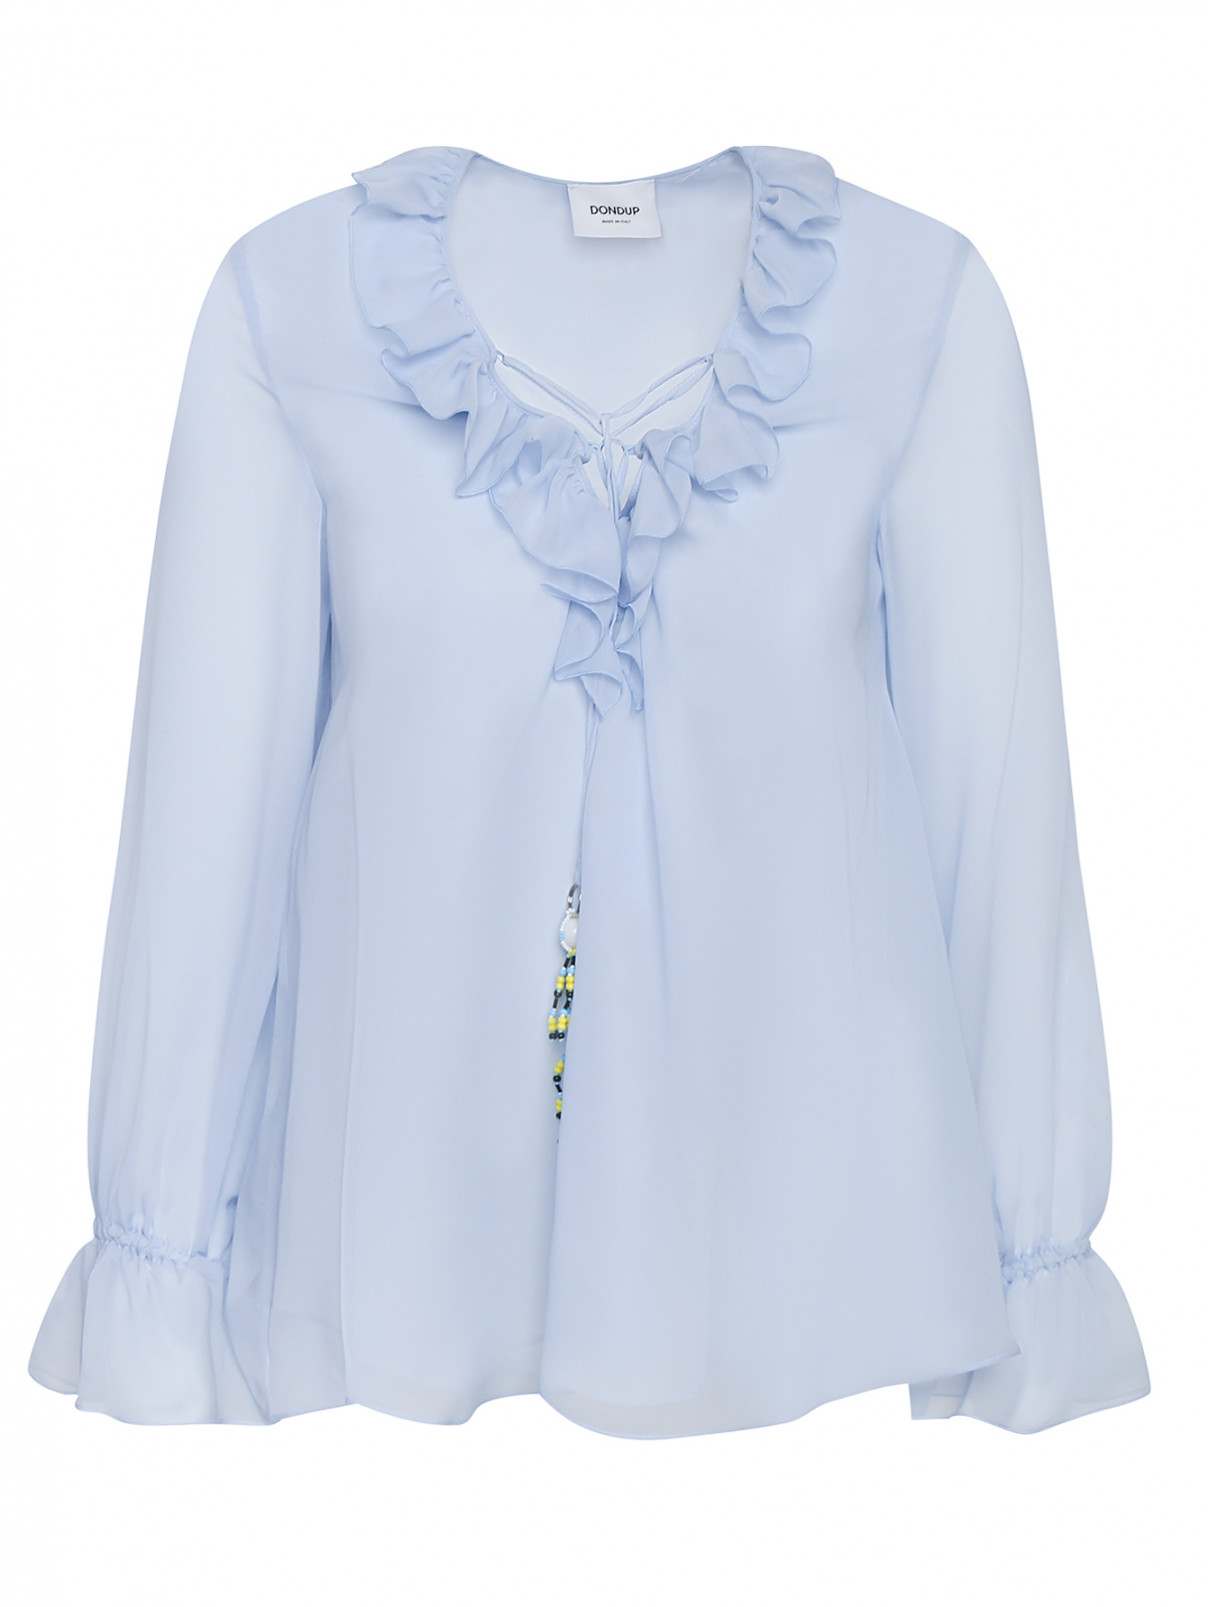 Блуза с аппликацией на груди Dondup  –  Общий вид  – Цвет:  Синий